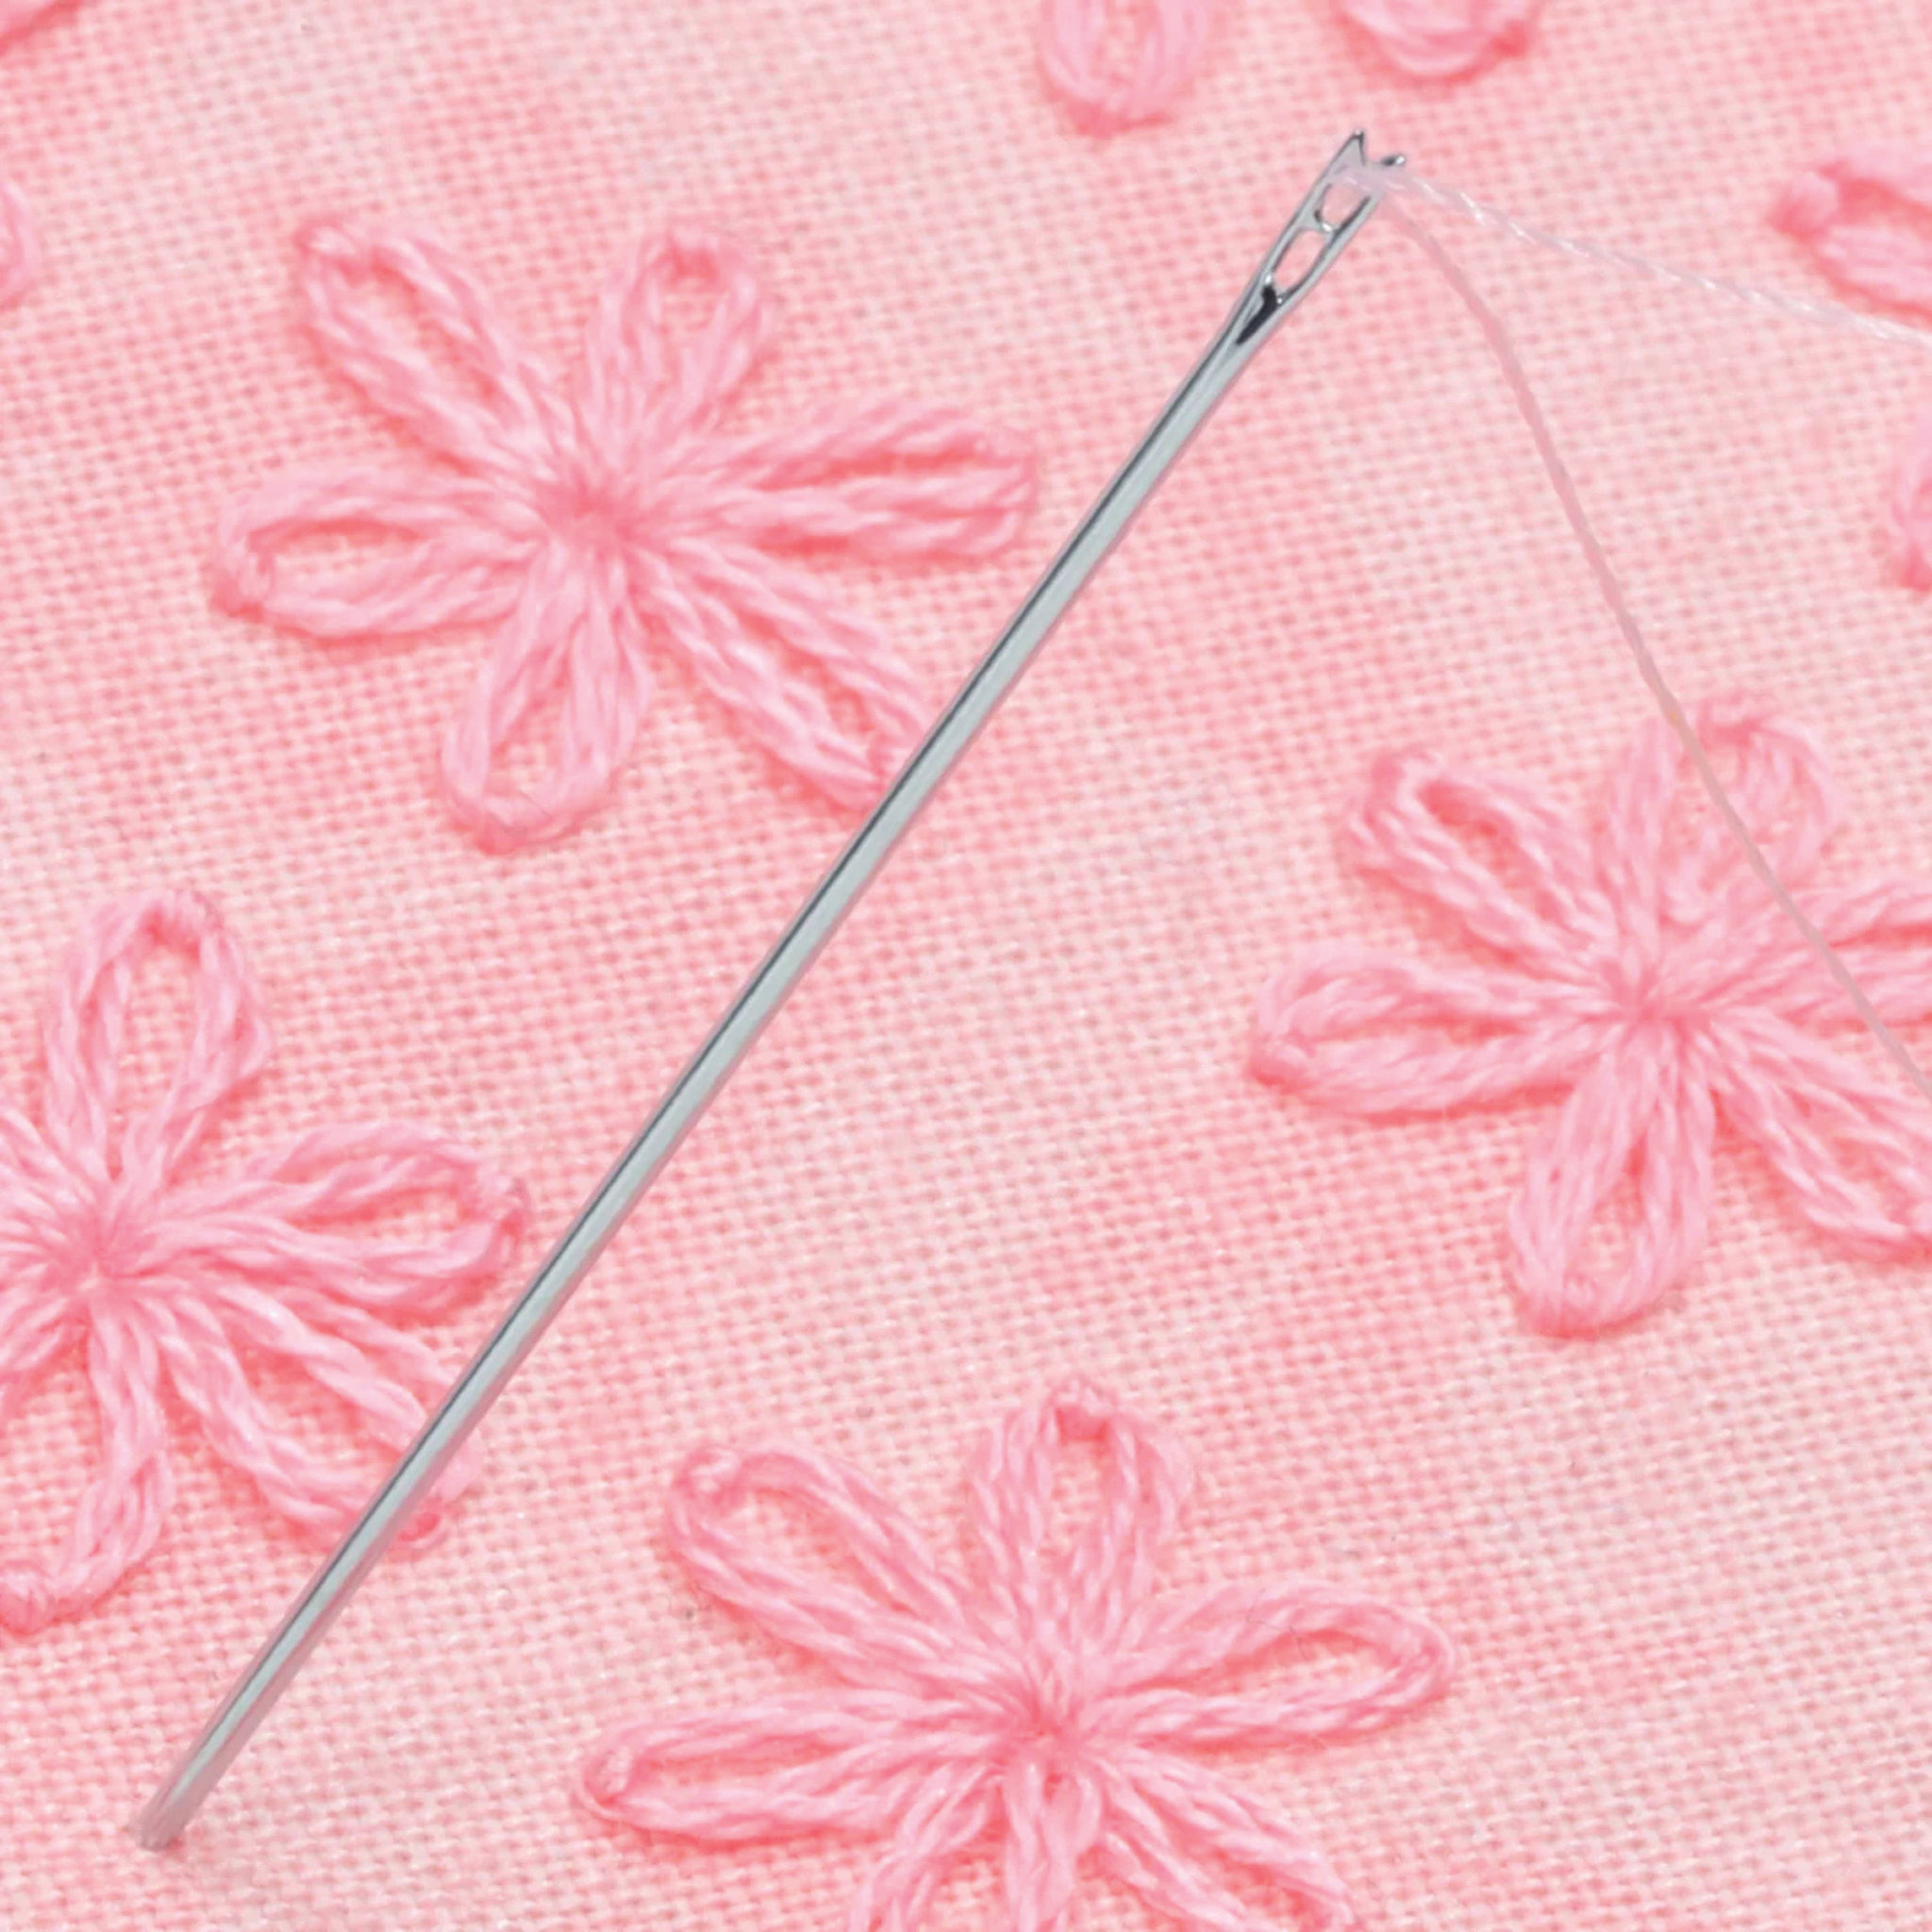 Dritz Embroidery Needles